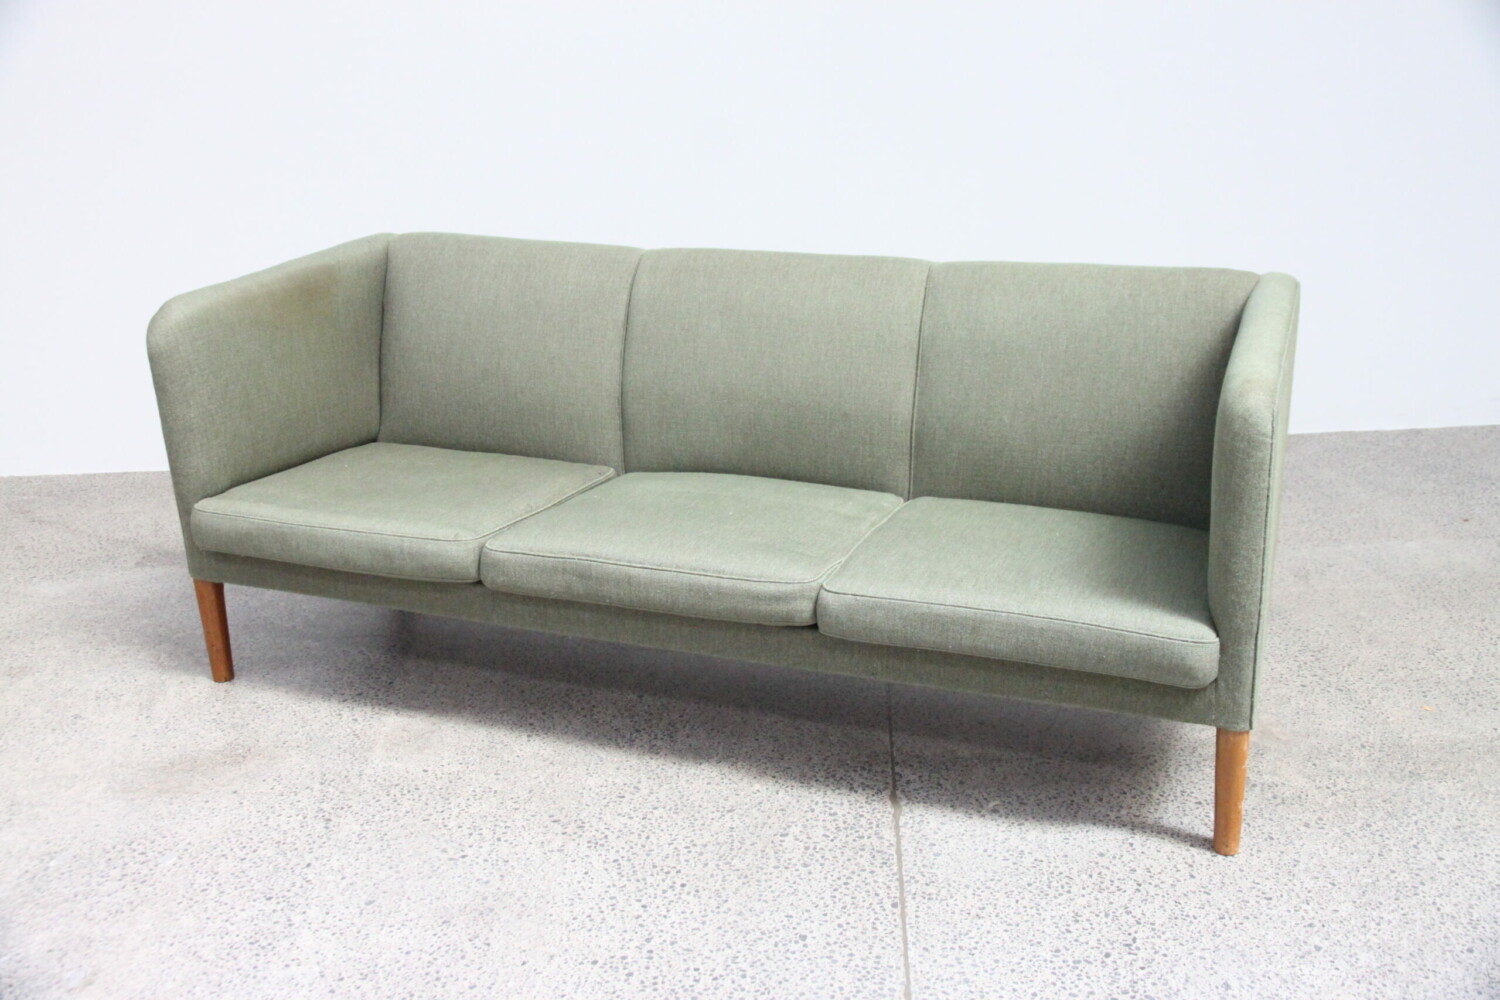 ‘Even Arm Sofa’ by Hans Wegner